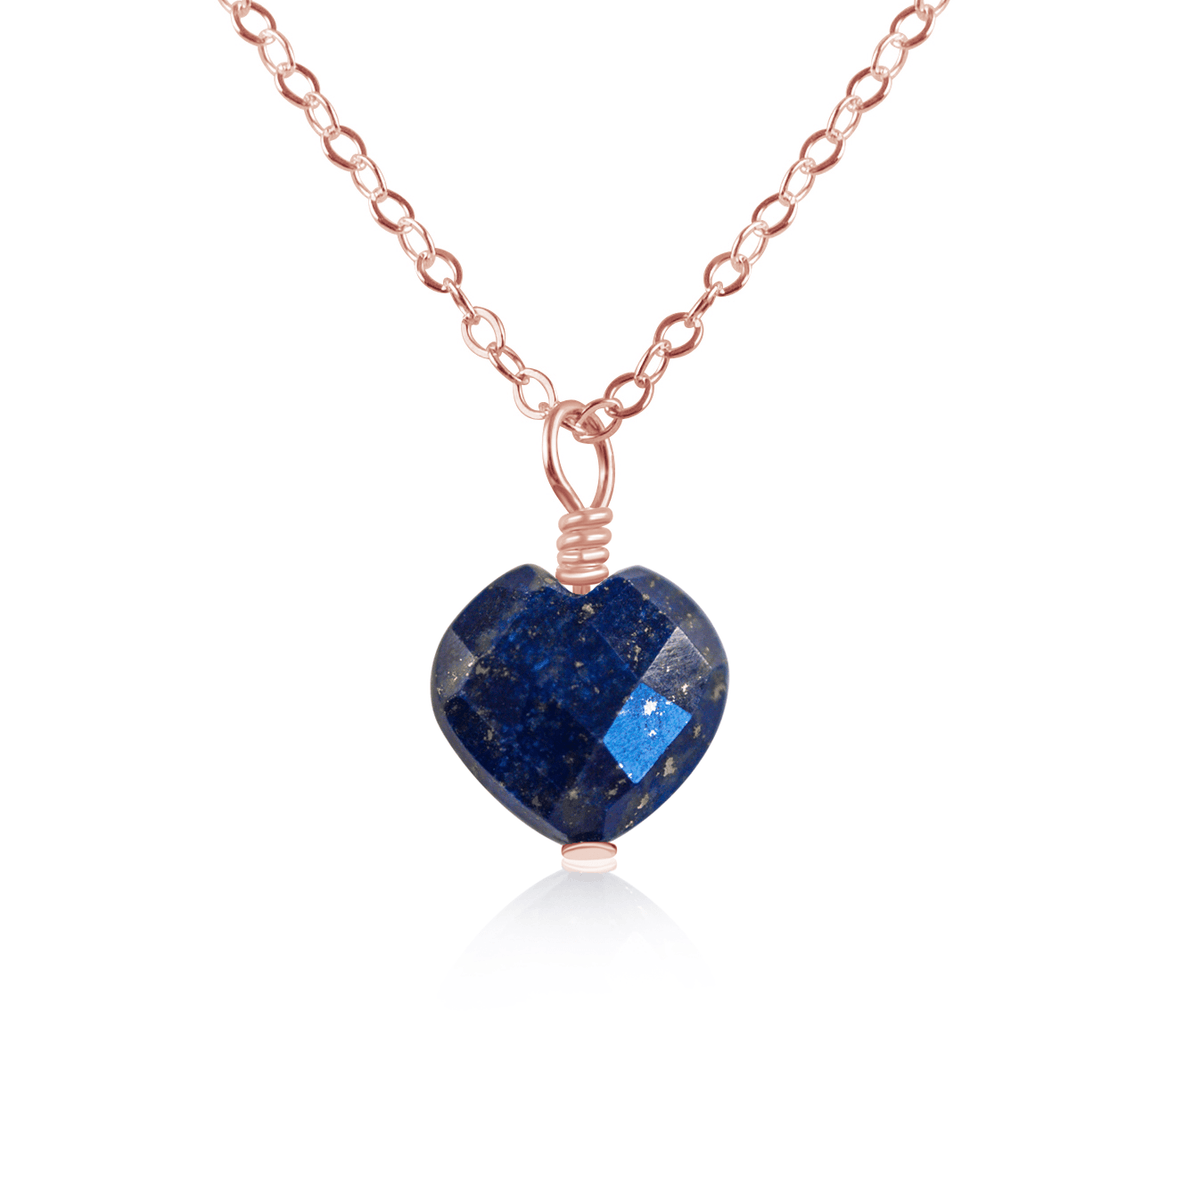 Lapis Lazuli Crystal Heart Pendant Necklace - Lapis Lazuli Crystal Heart Pendant Necklace - 14k Rose Gold Fill / Cable - Luna Tide Handmade Crystal Jewellery